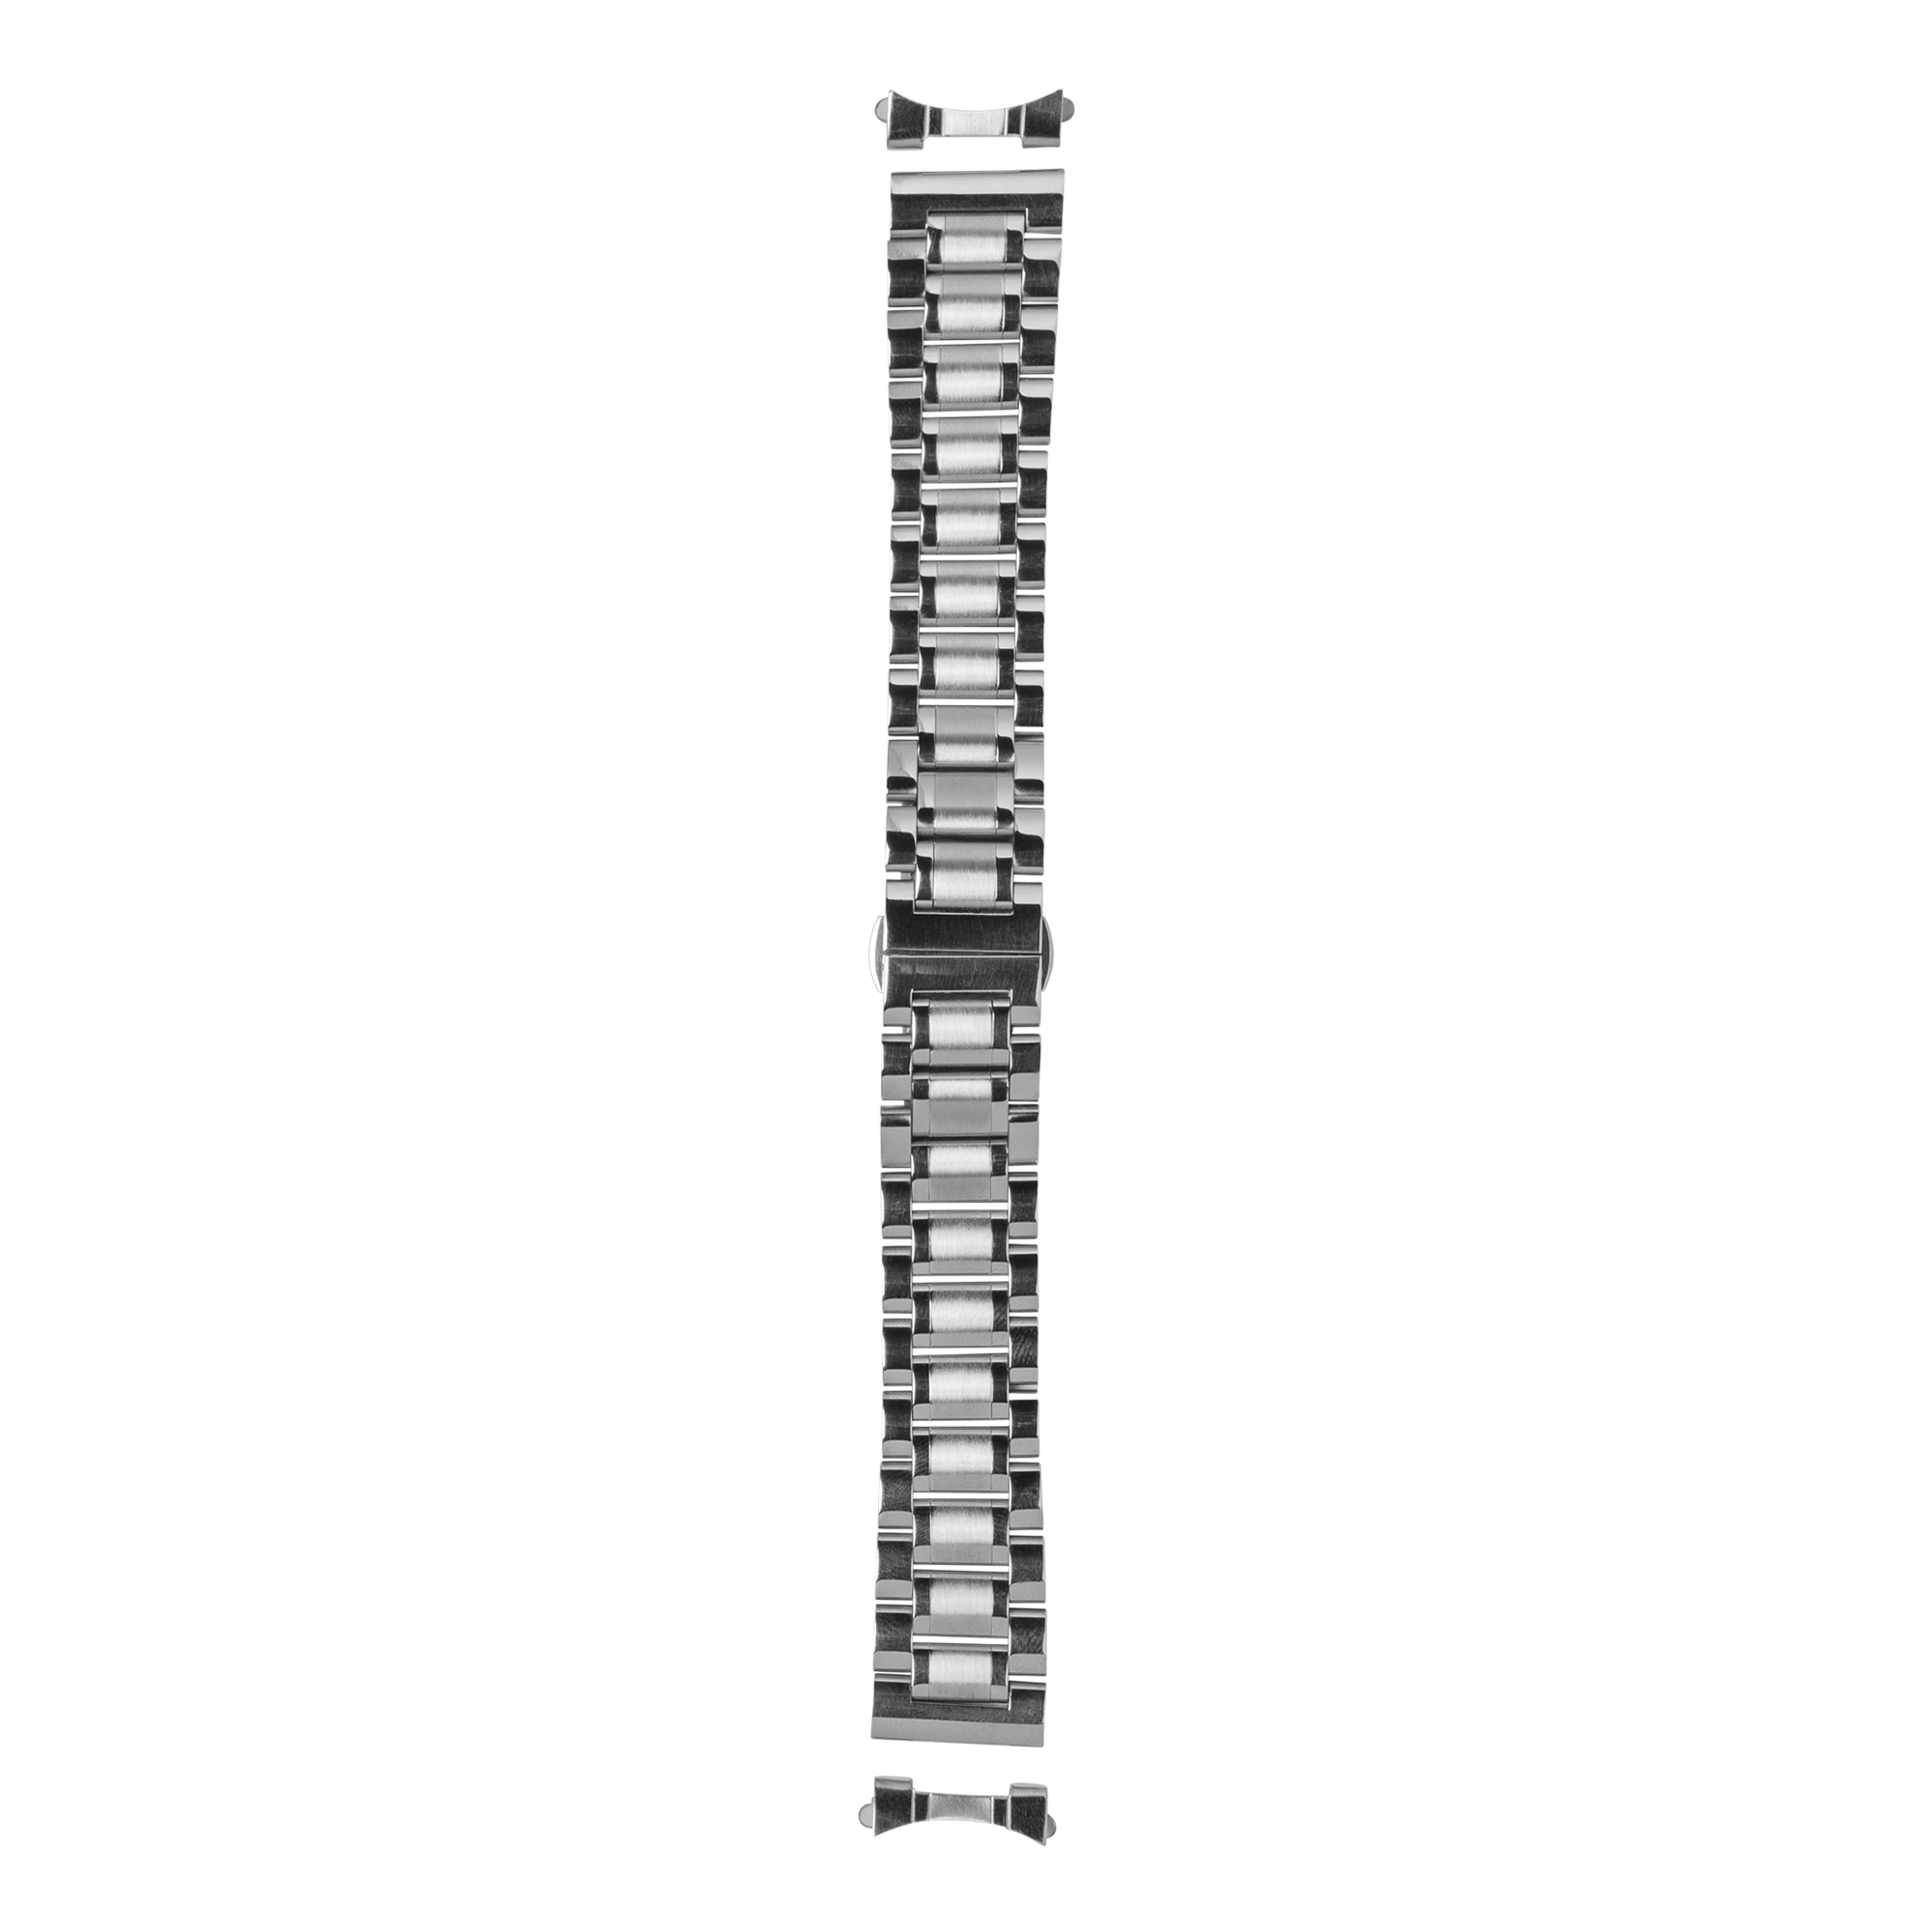 [Curved] Steel Bracelet - Silver